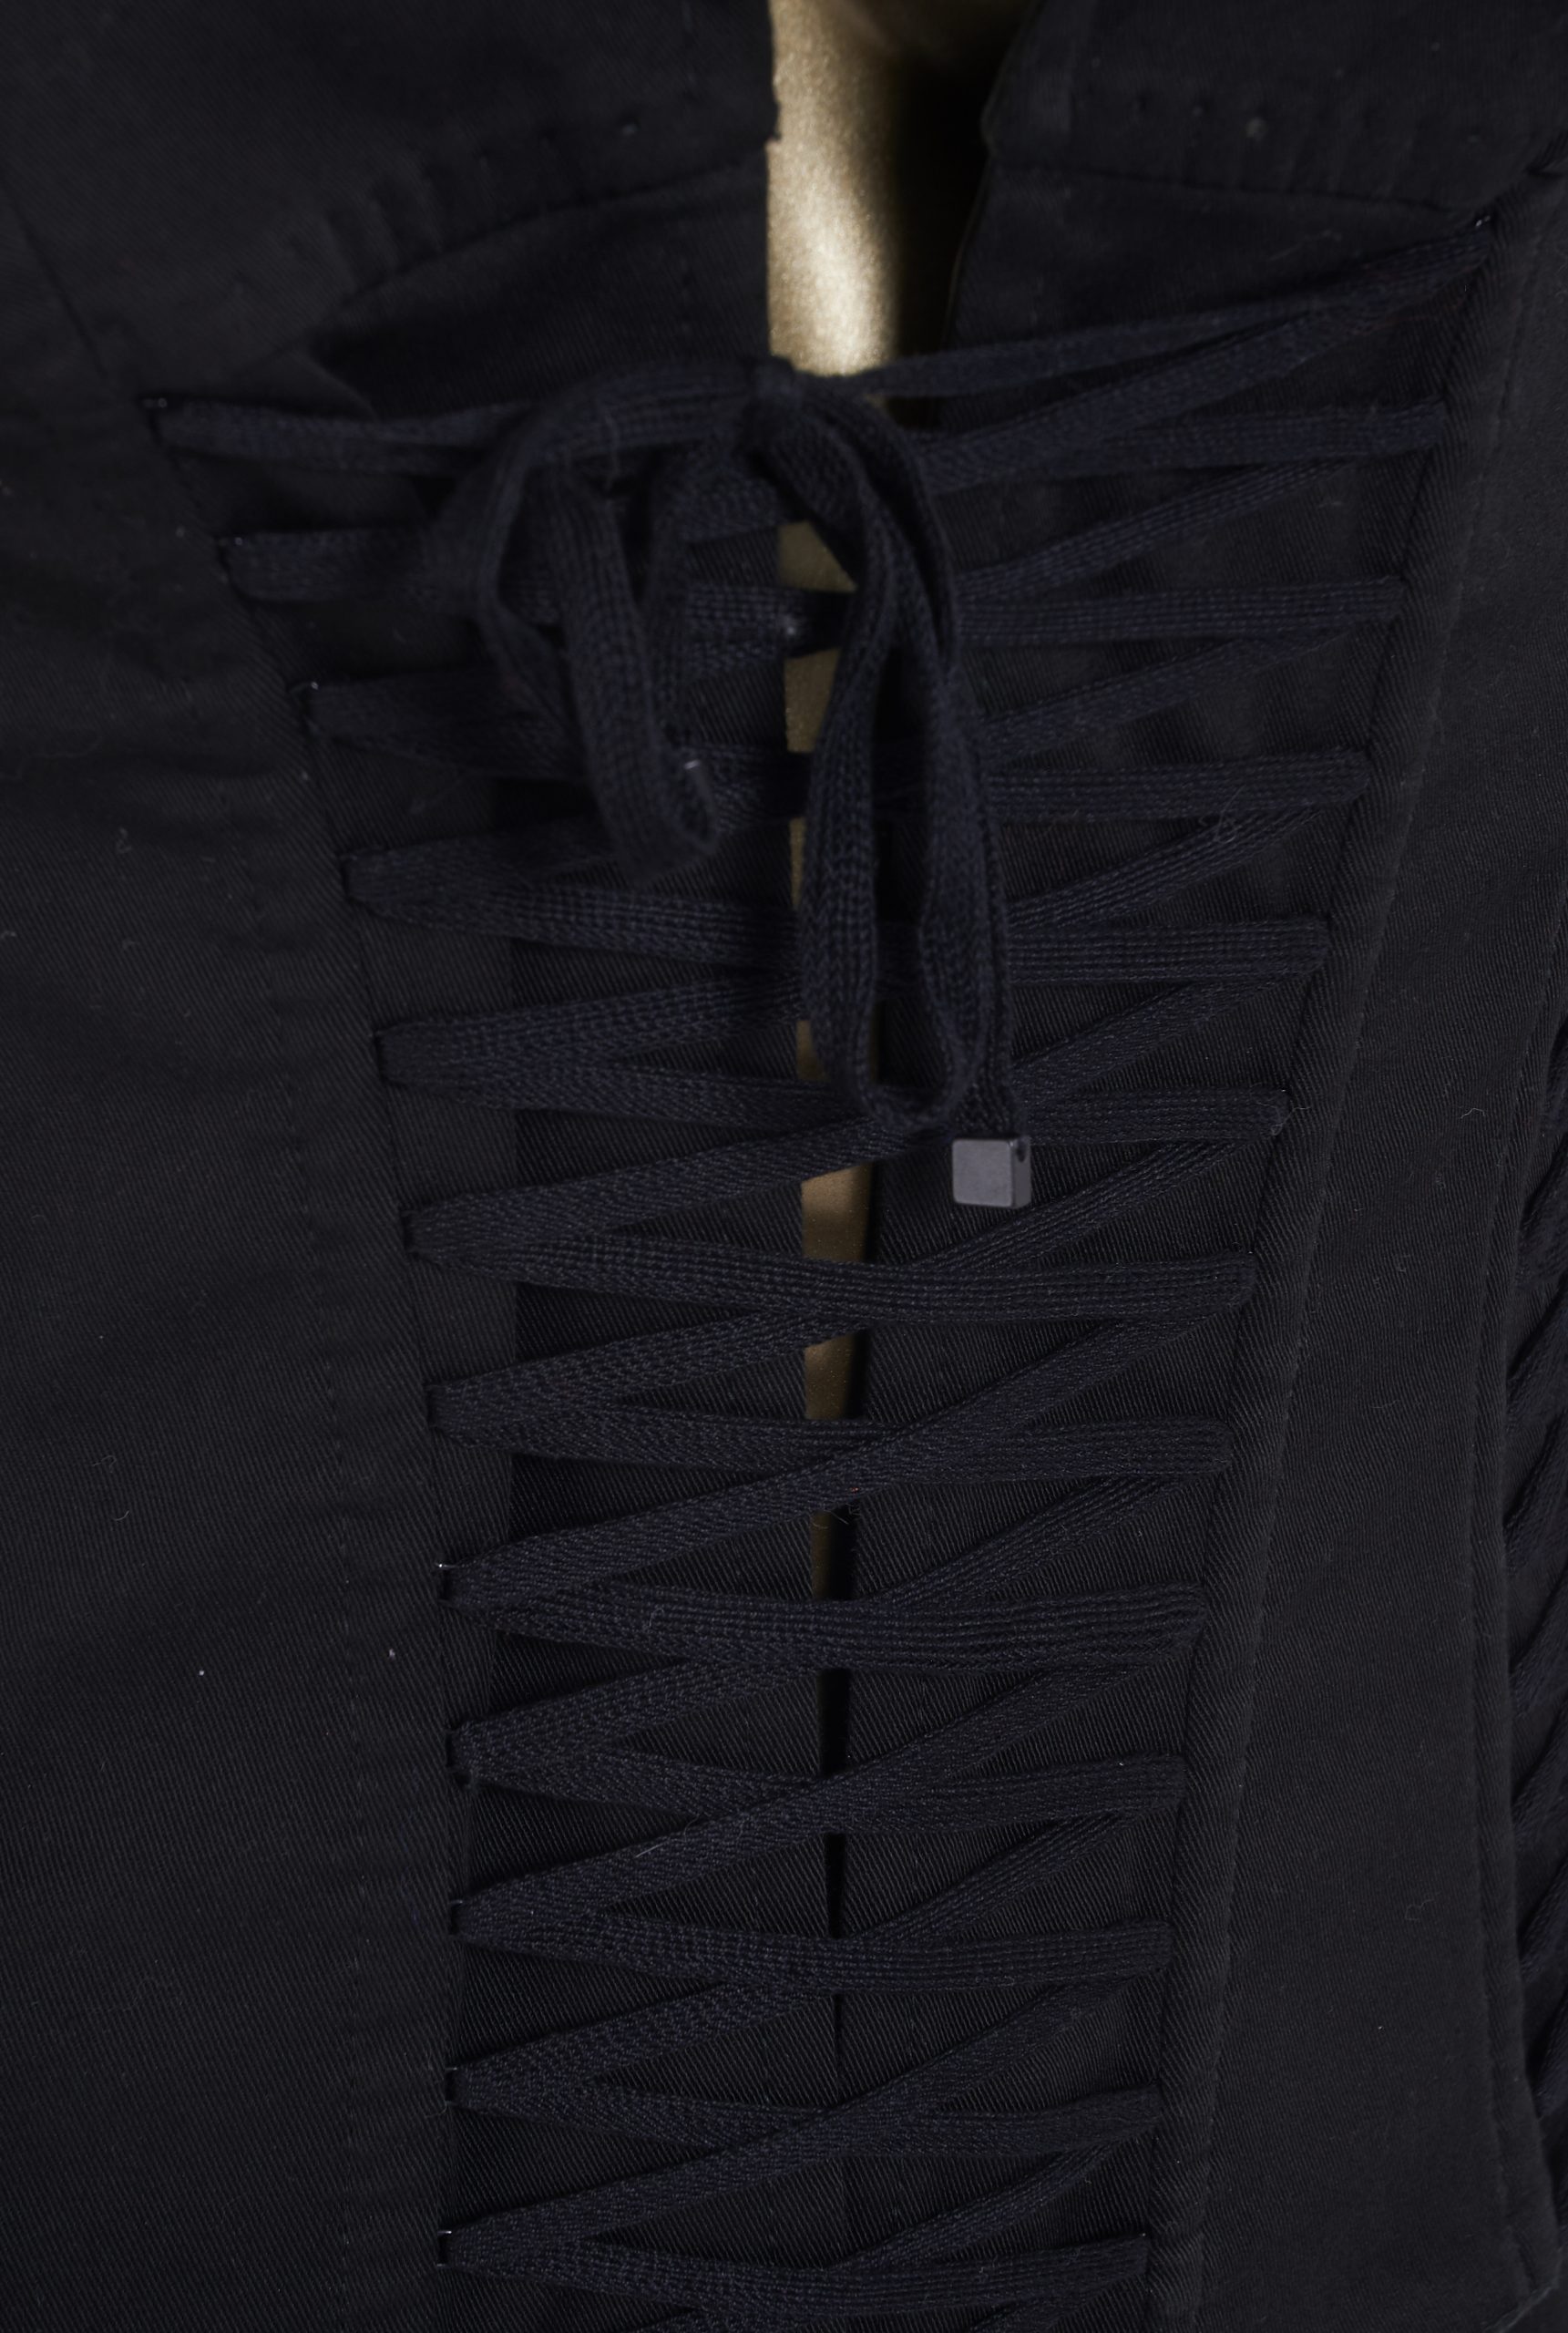 Dolce & Gabbana Lace Up Corset Cut Out Jacket and Pant Suit